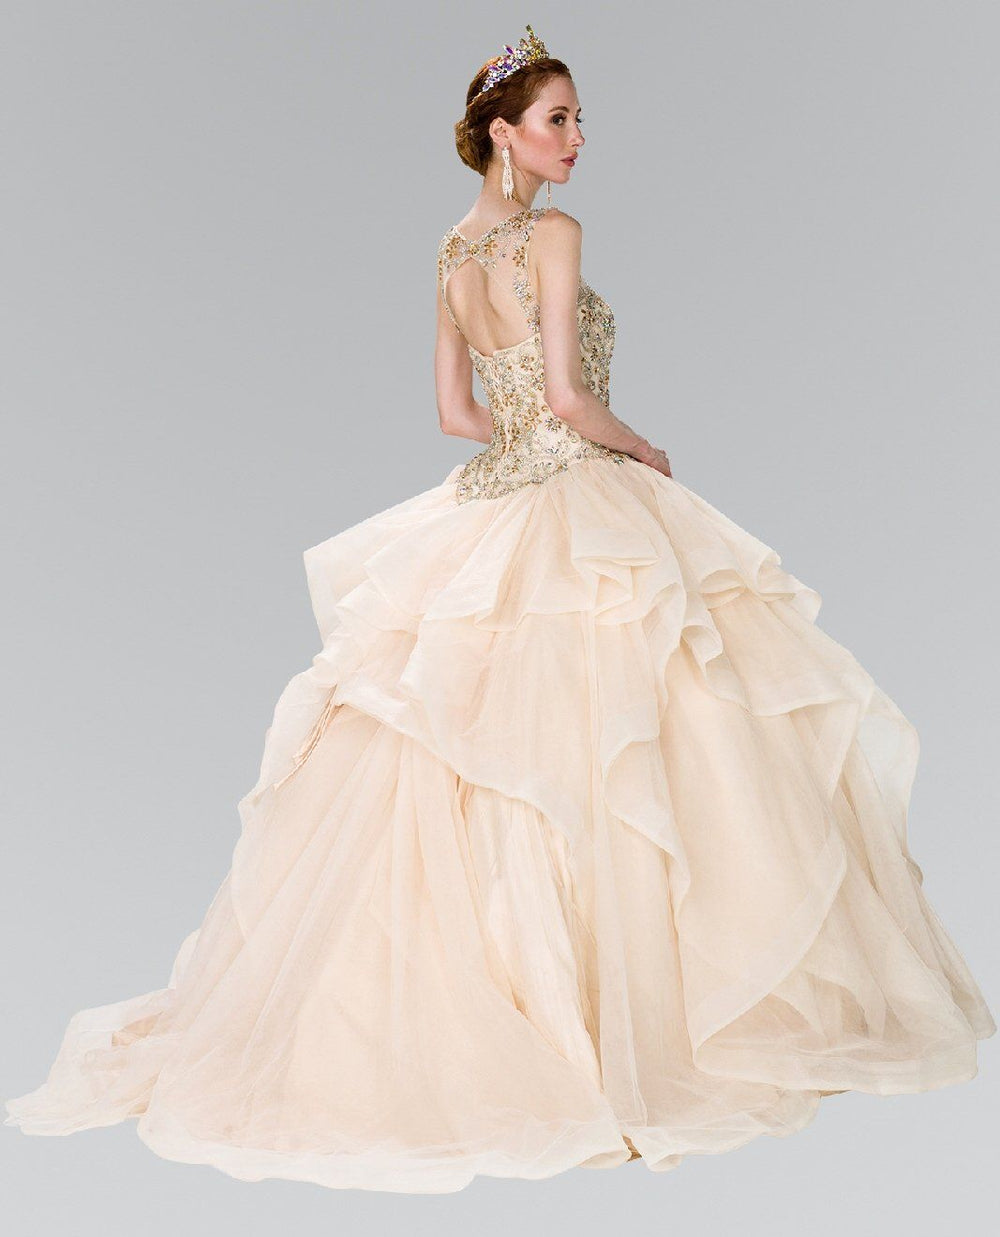 Beaded Illusion Ballgown with Bolero by Elizabeth K GL2378-Quinceanera Dresses-ABC Fashion